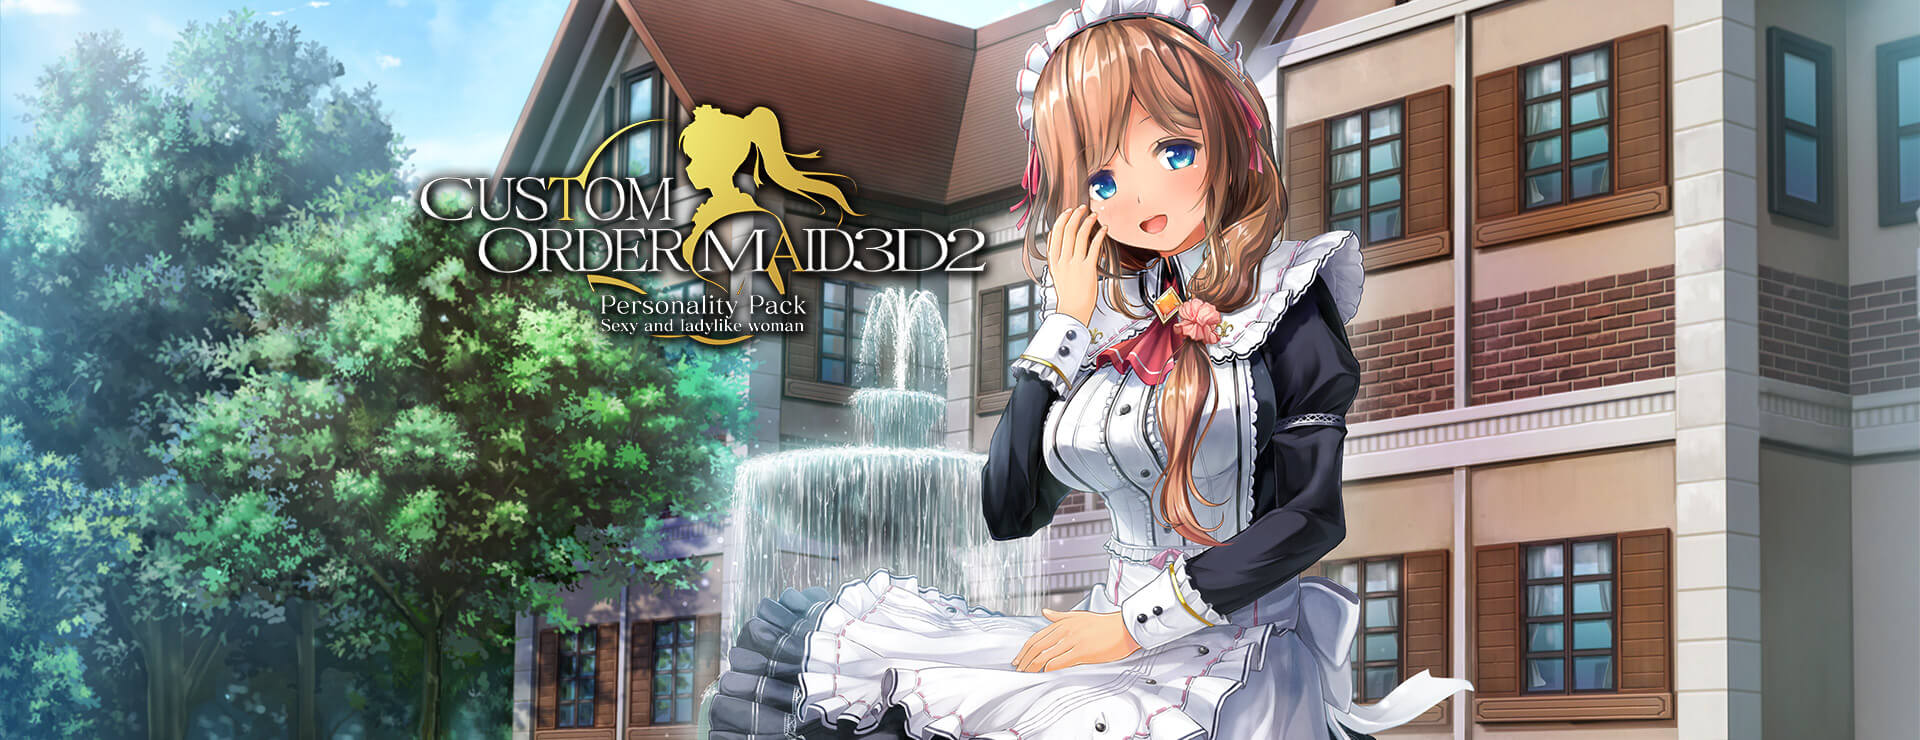 Custom Order Maid 3D2 Sexy and Ladylike Woman DLC - Symulacja Gra